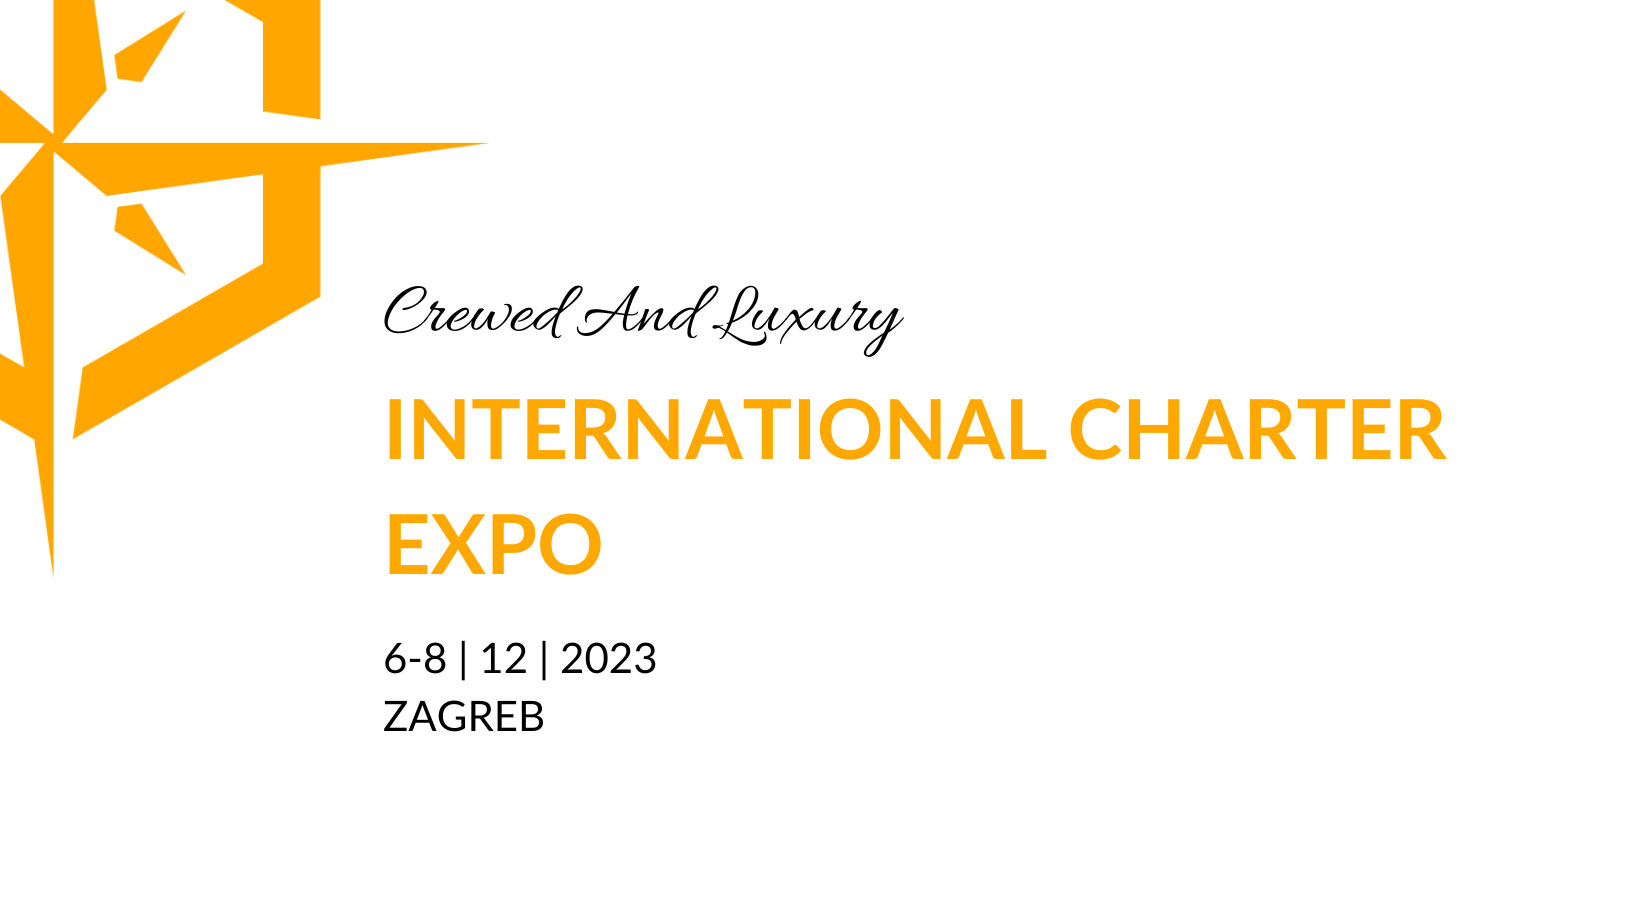 International Charter Expo - ZAGREB, DECEMBER 6-8 2023